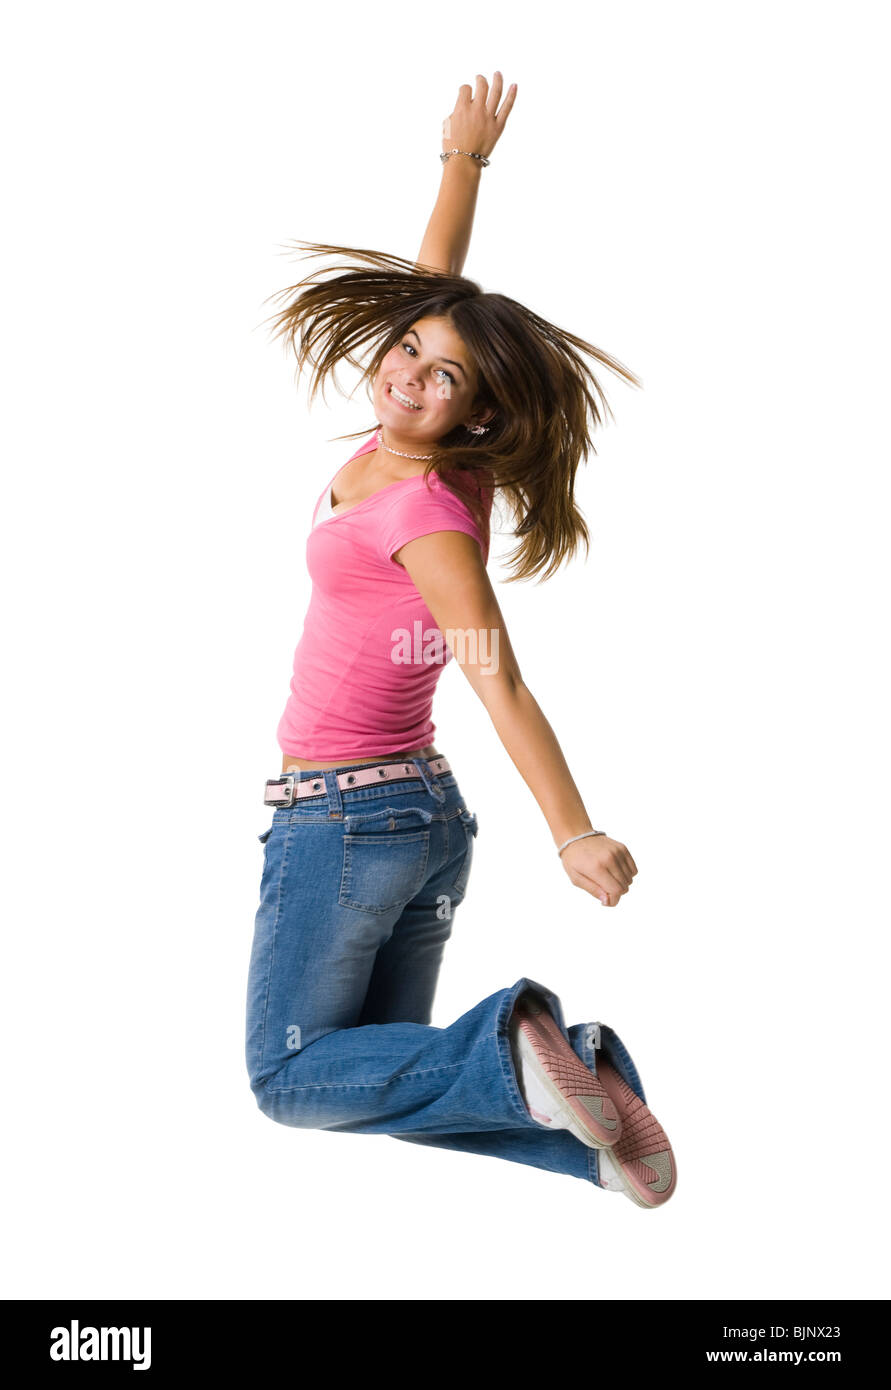 Woman jumping Stock Photo